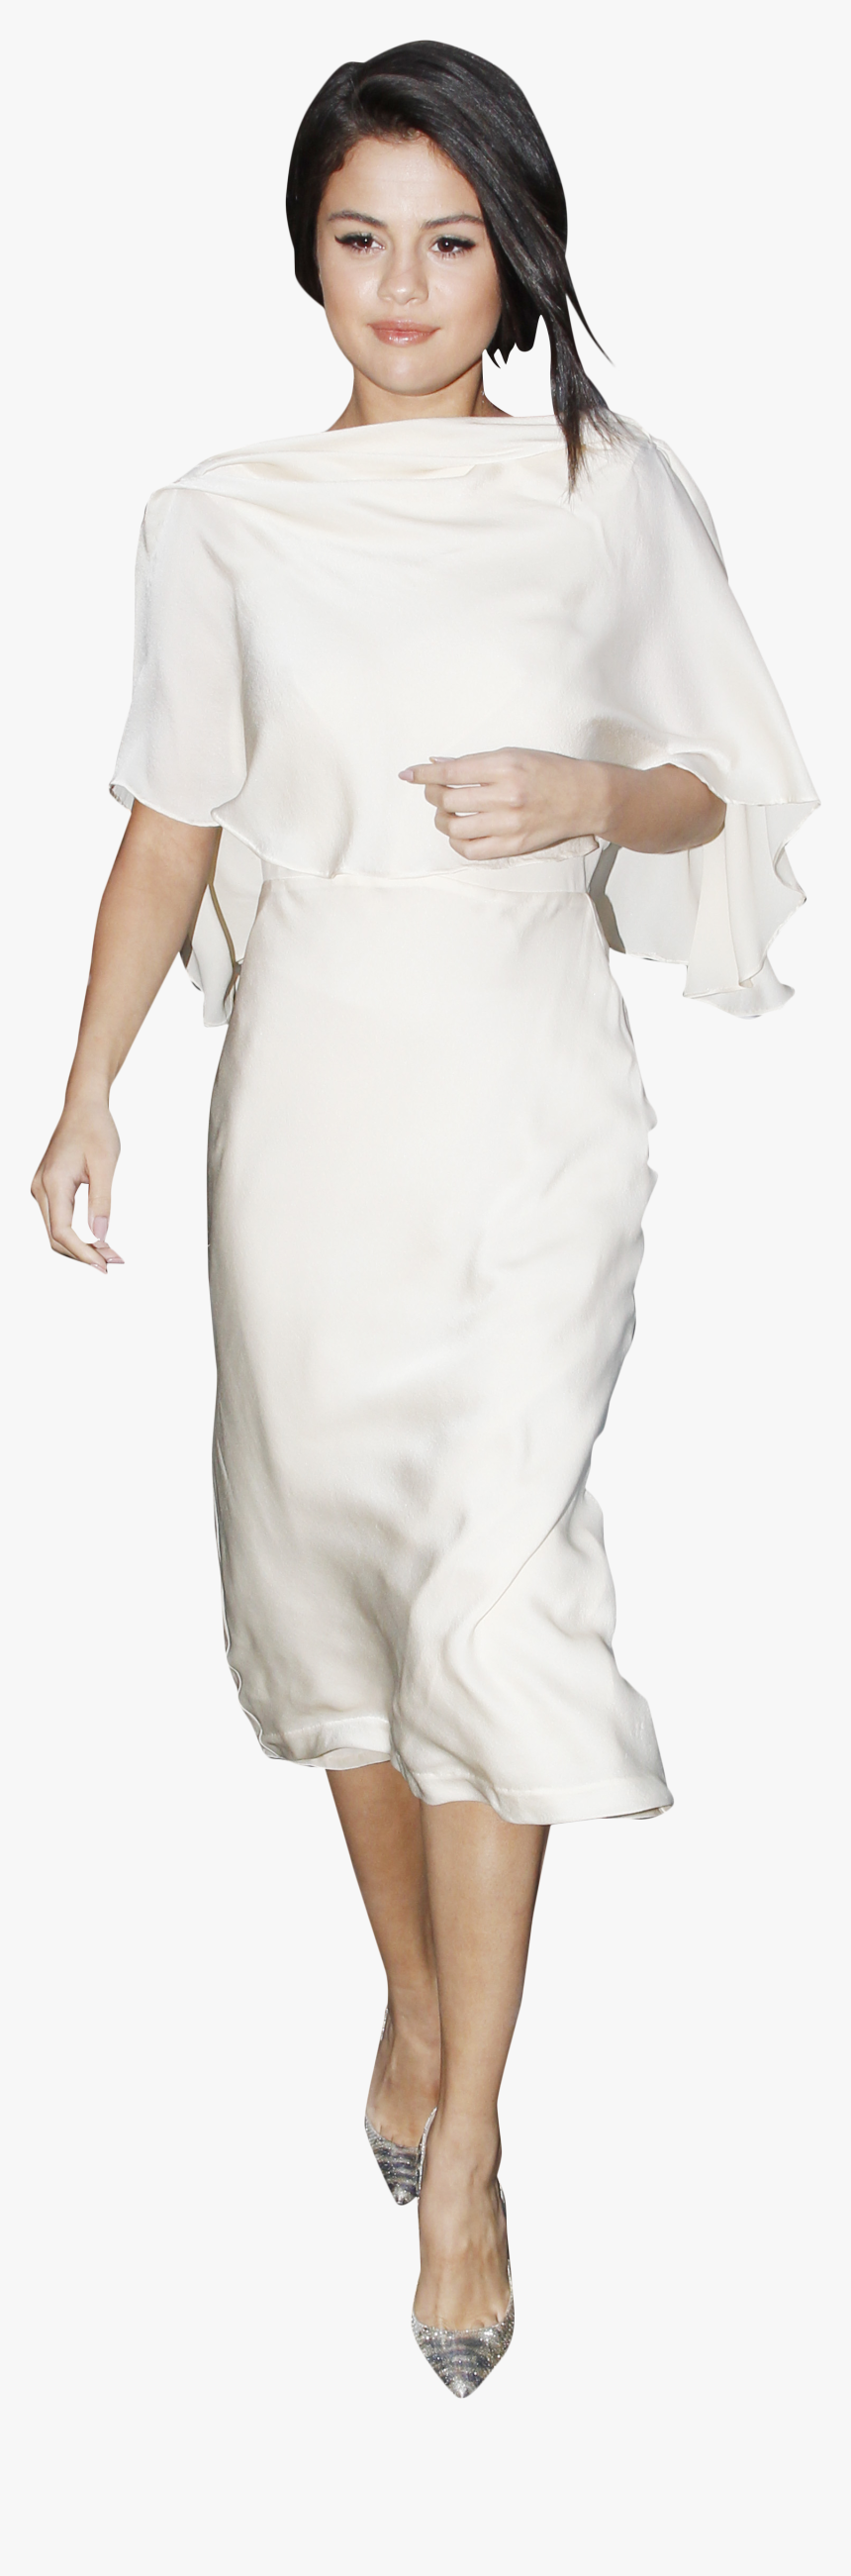 Selena Gomez White Dress - Cocktail Dress, HD Png Download, Free Download